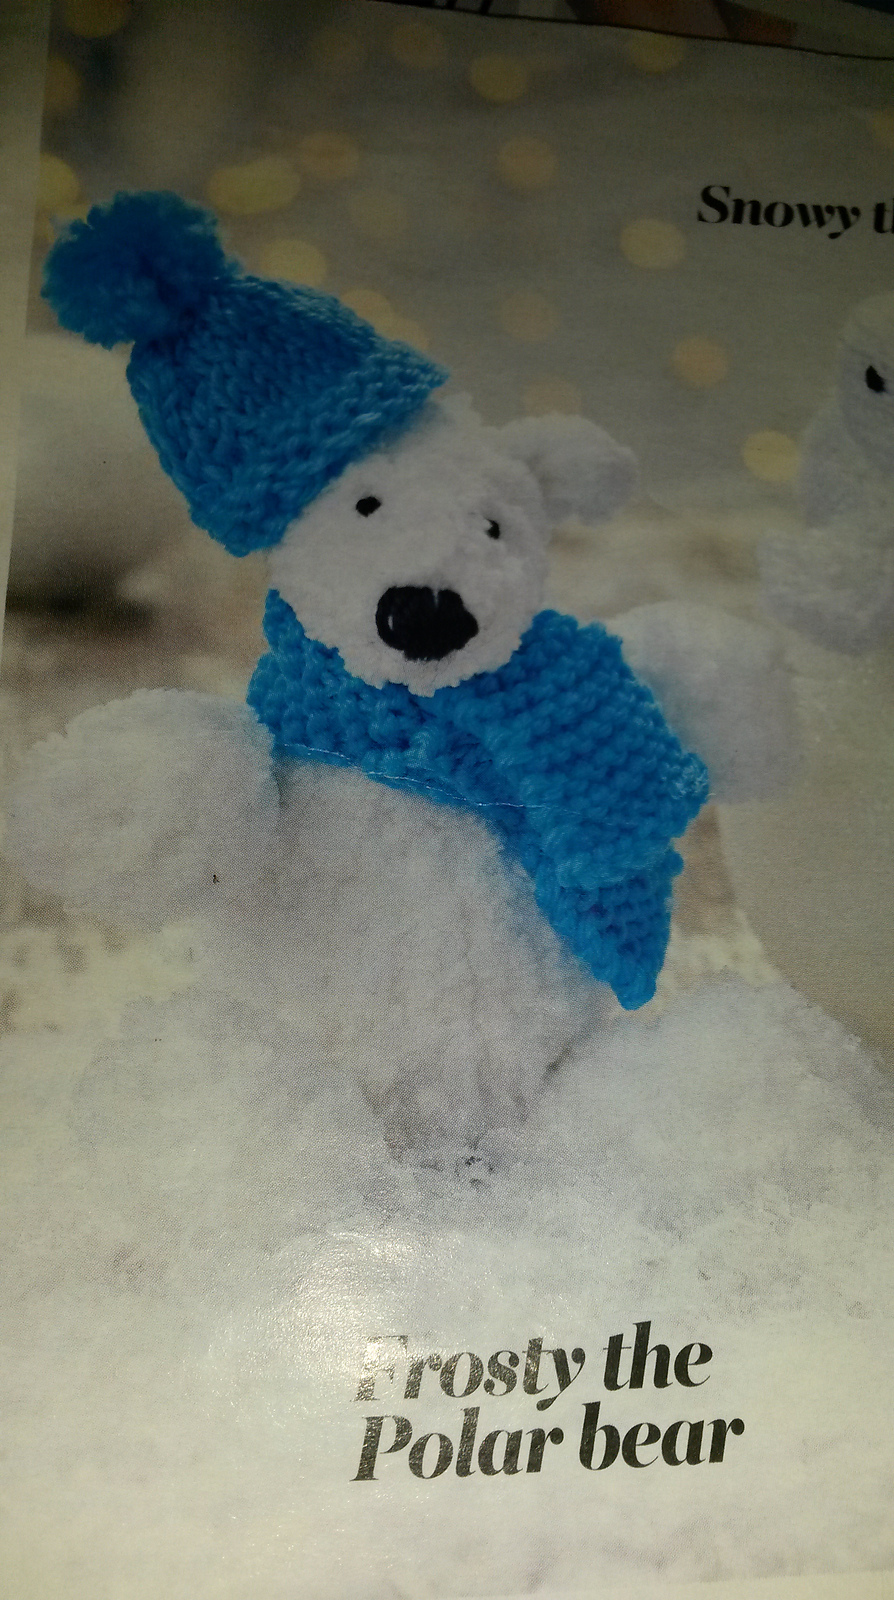 Frosty the Polar Bear by Sue Stratford